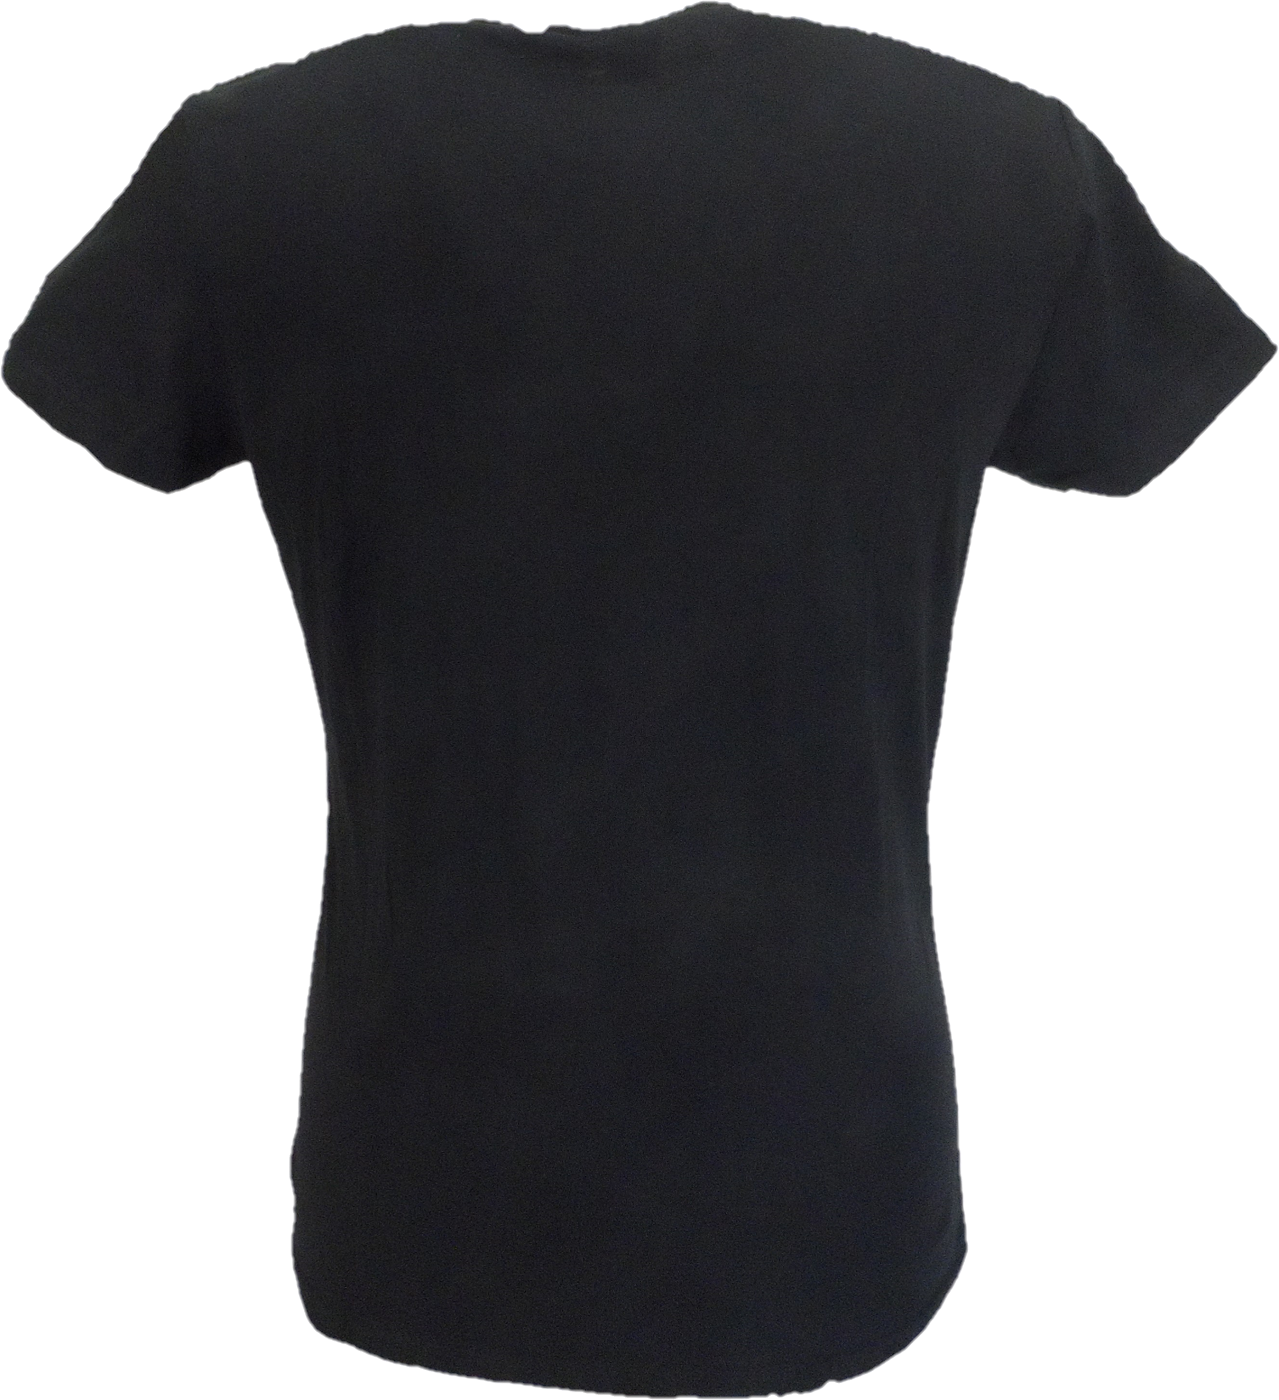 Camiseta oficial negra para mujer depeche mode people are people